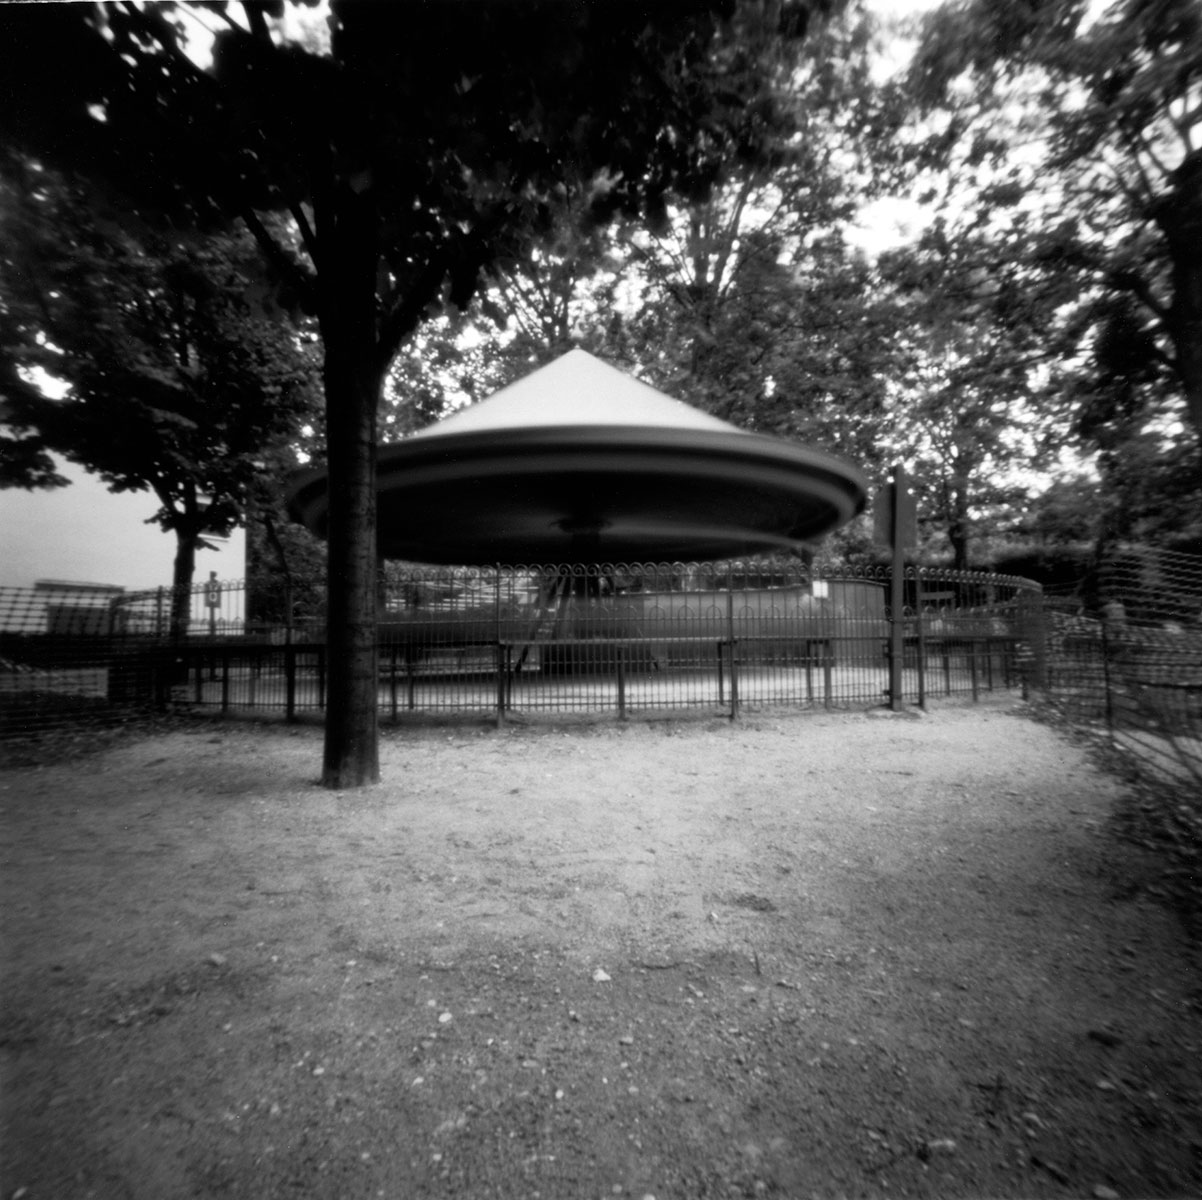 Carousel, Luxembourg Gardens, Paris, France (2001) 1:29 sec